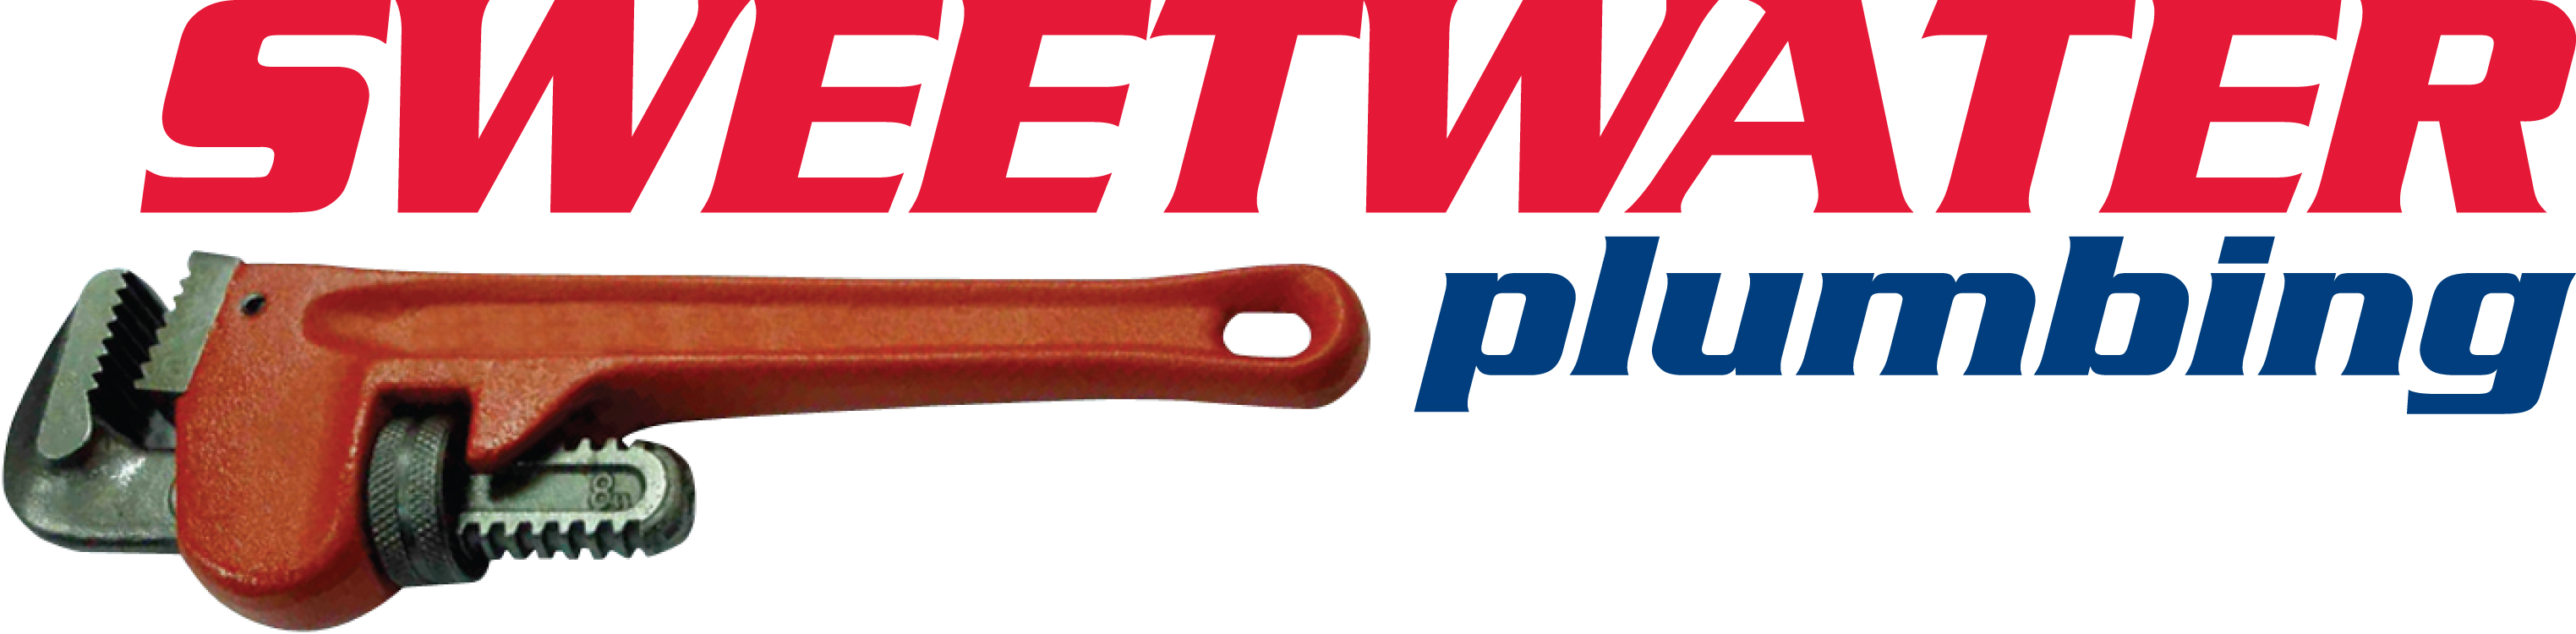 Sweetwater Plumbing Industries, Inc. Logo